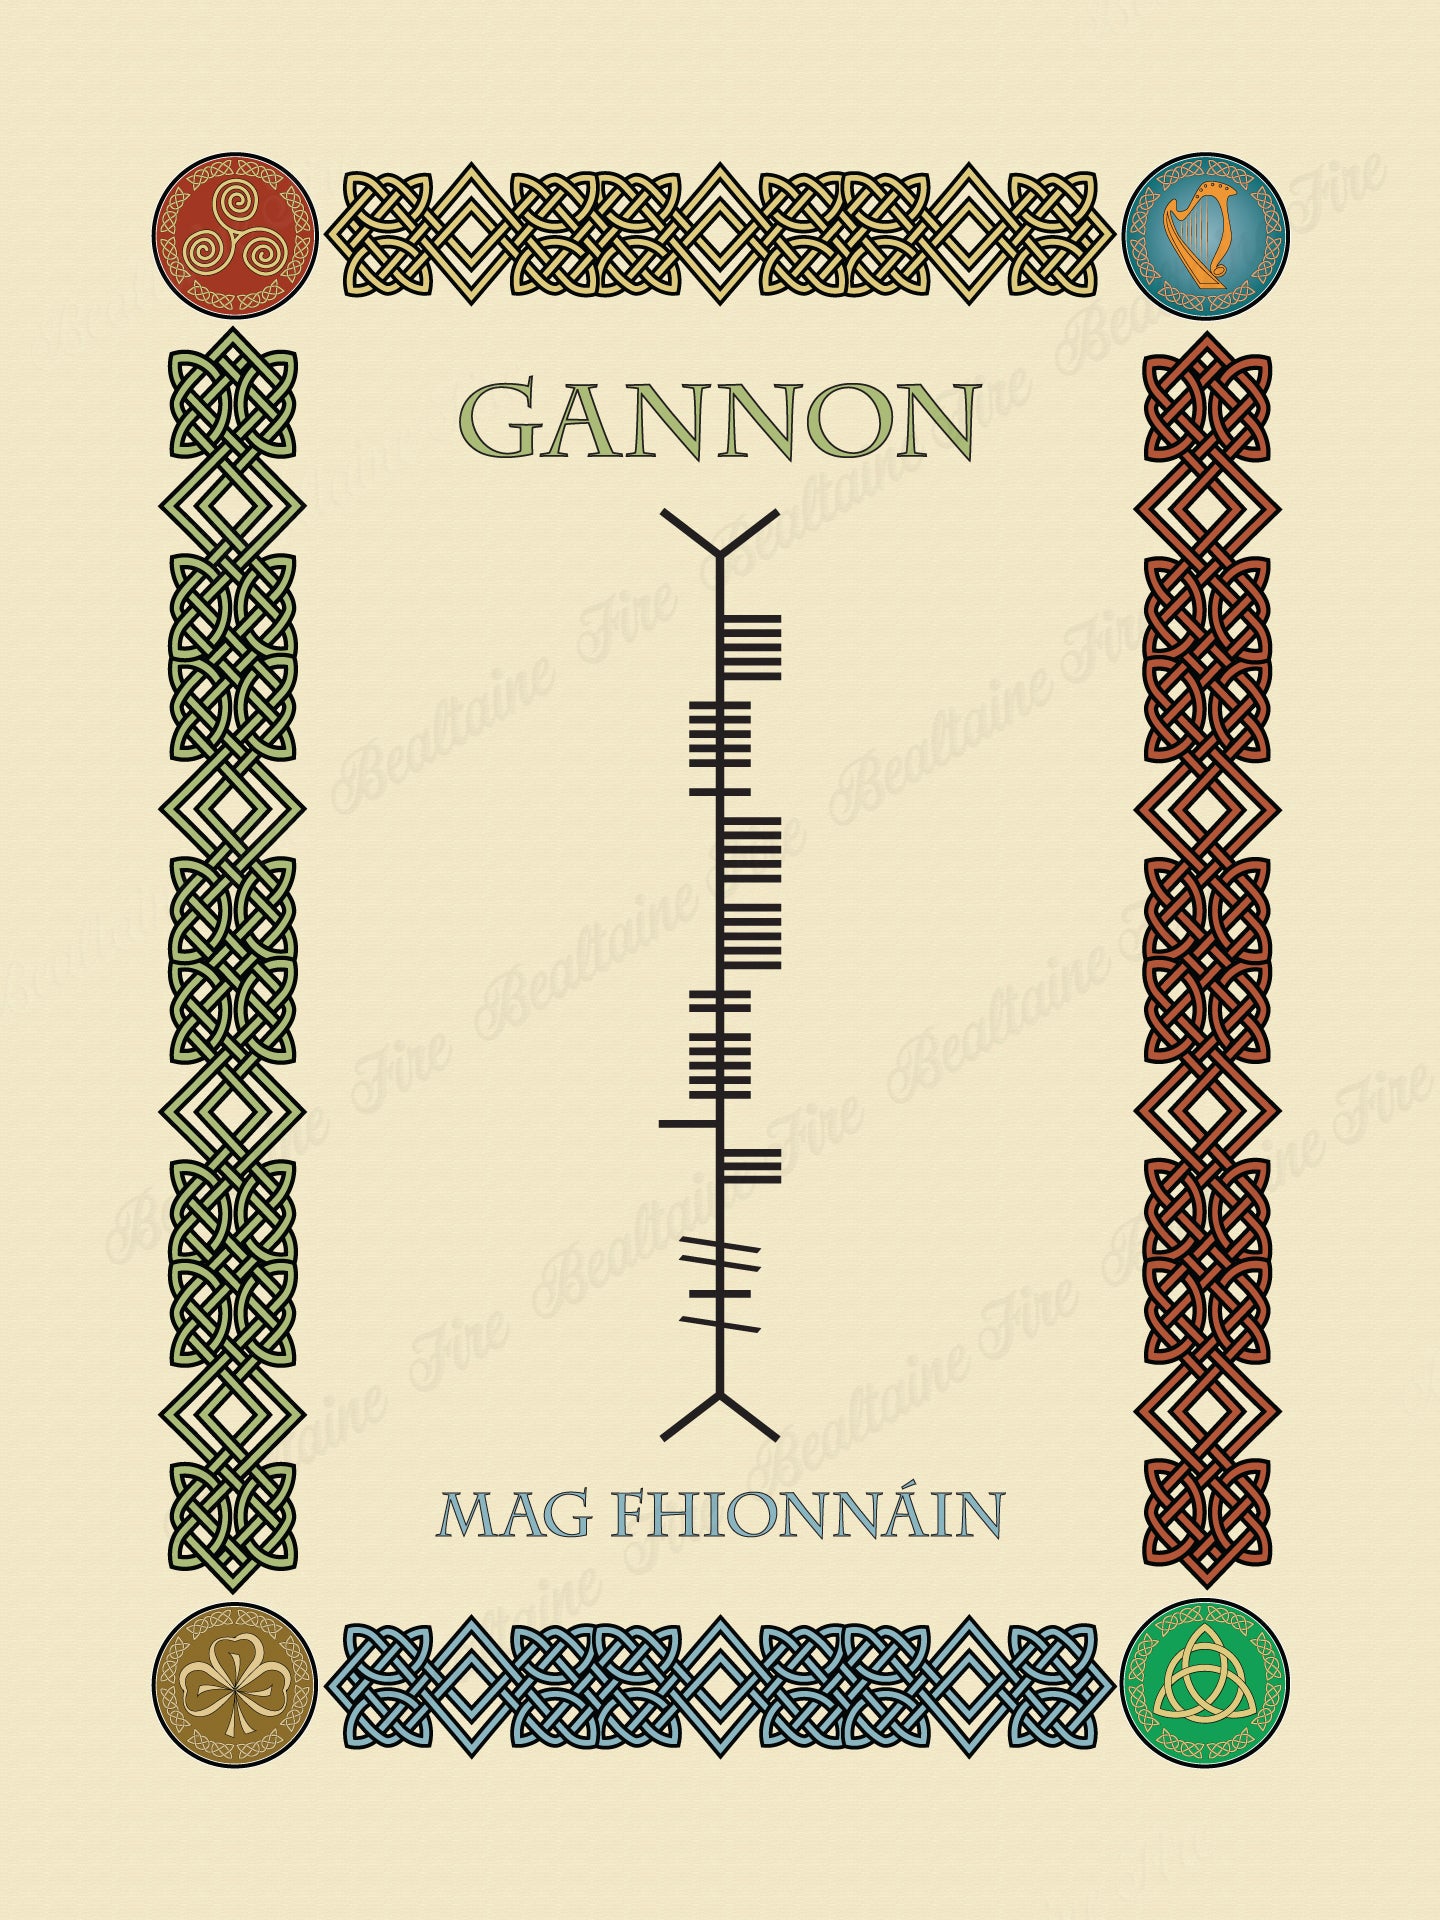 Gannon in Old Irish and Ogham - Premium luster unframed print